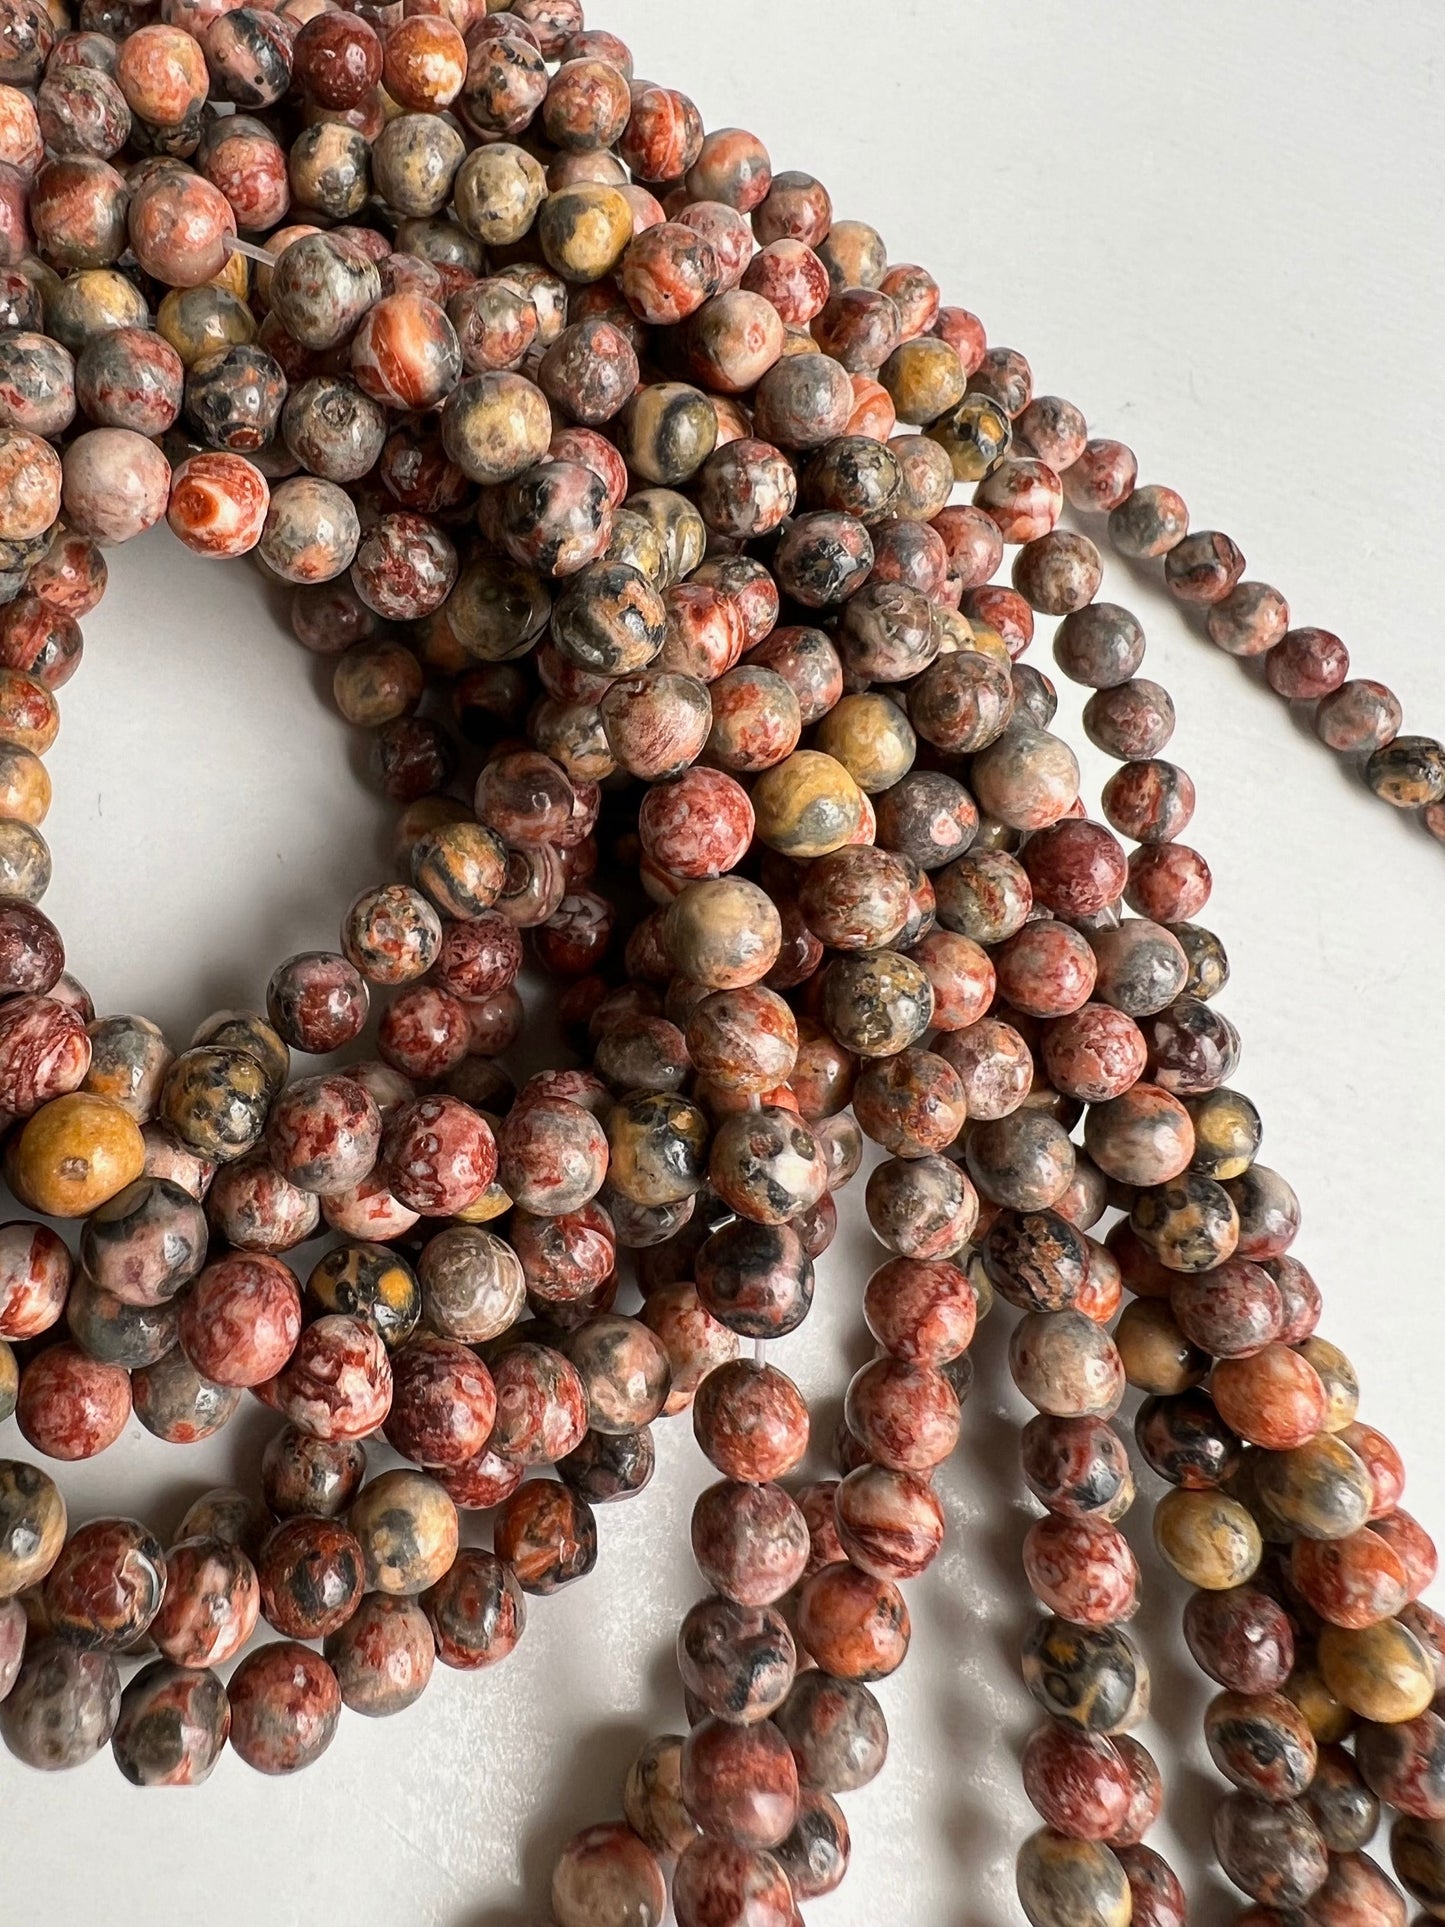 Leopard skin Jasper 4mm smooth Round Beads, Jewelry Making Gemstone Beads, Necklace, Bracelet 16" Strand. Beautiful natural pattern beads